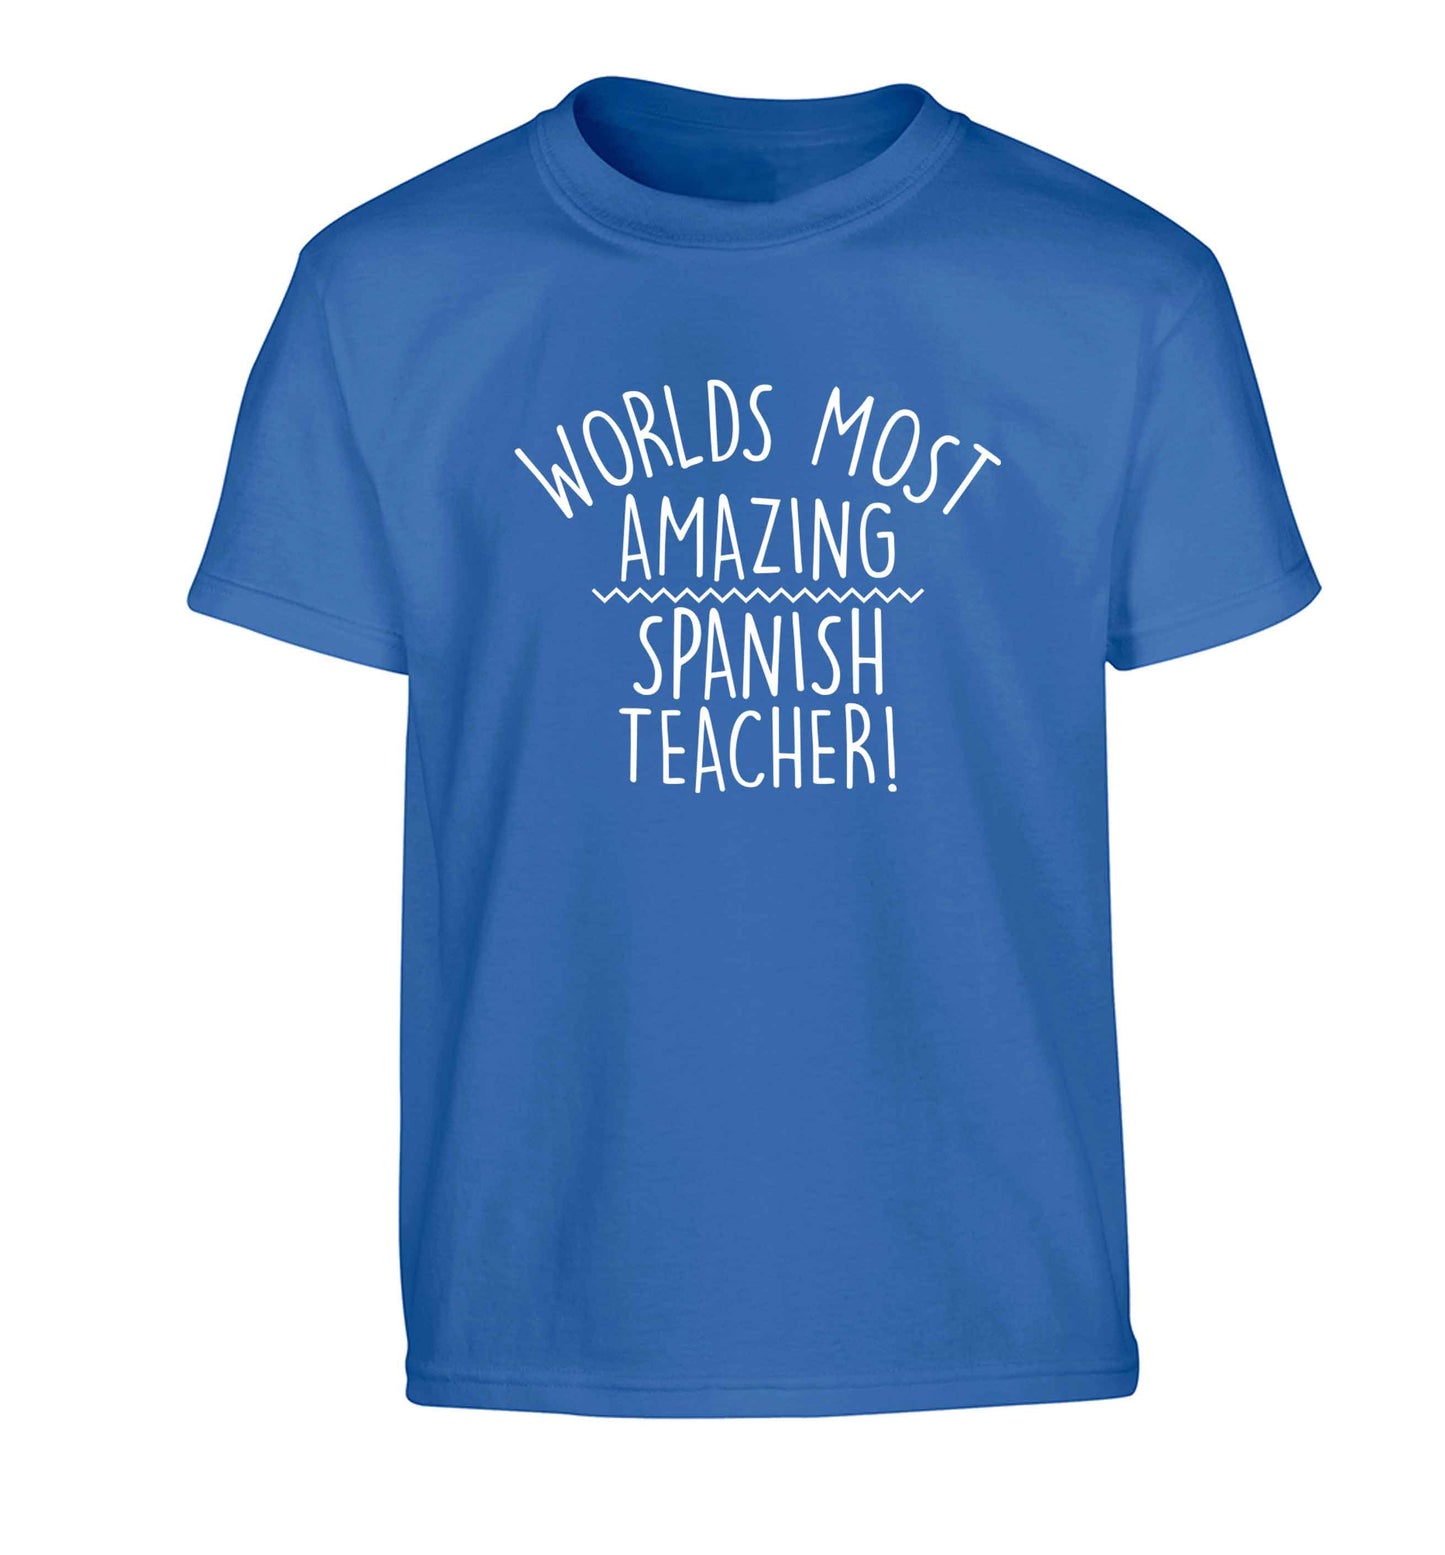 Worlds most amazing Spanish teacher Children's blue Tshirt 12-13 Years